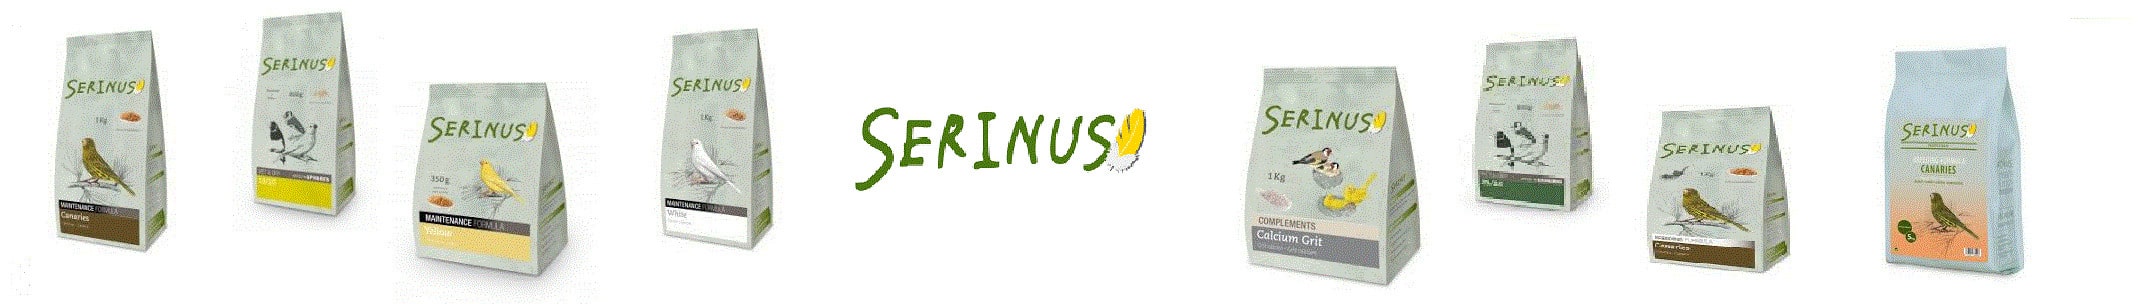  SERINUS 